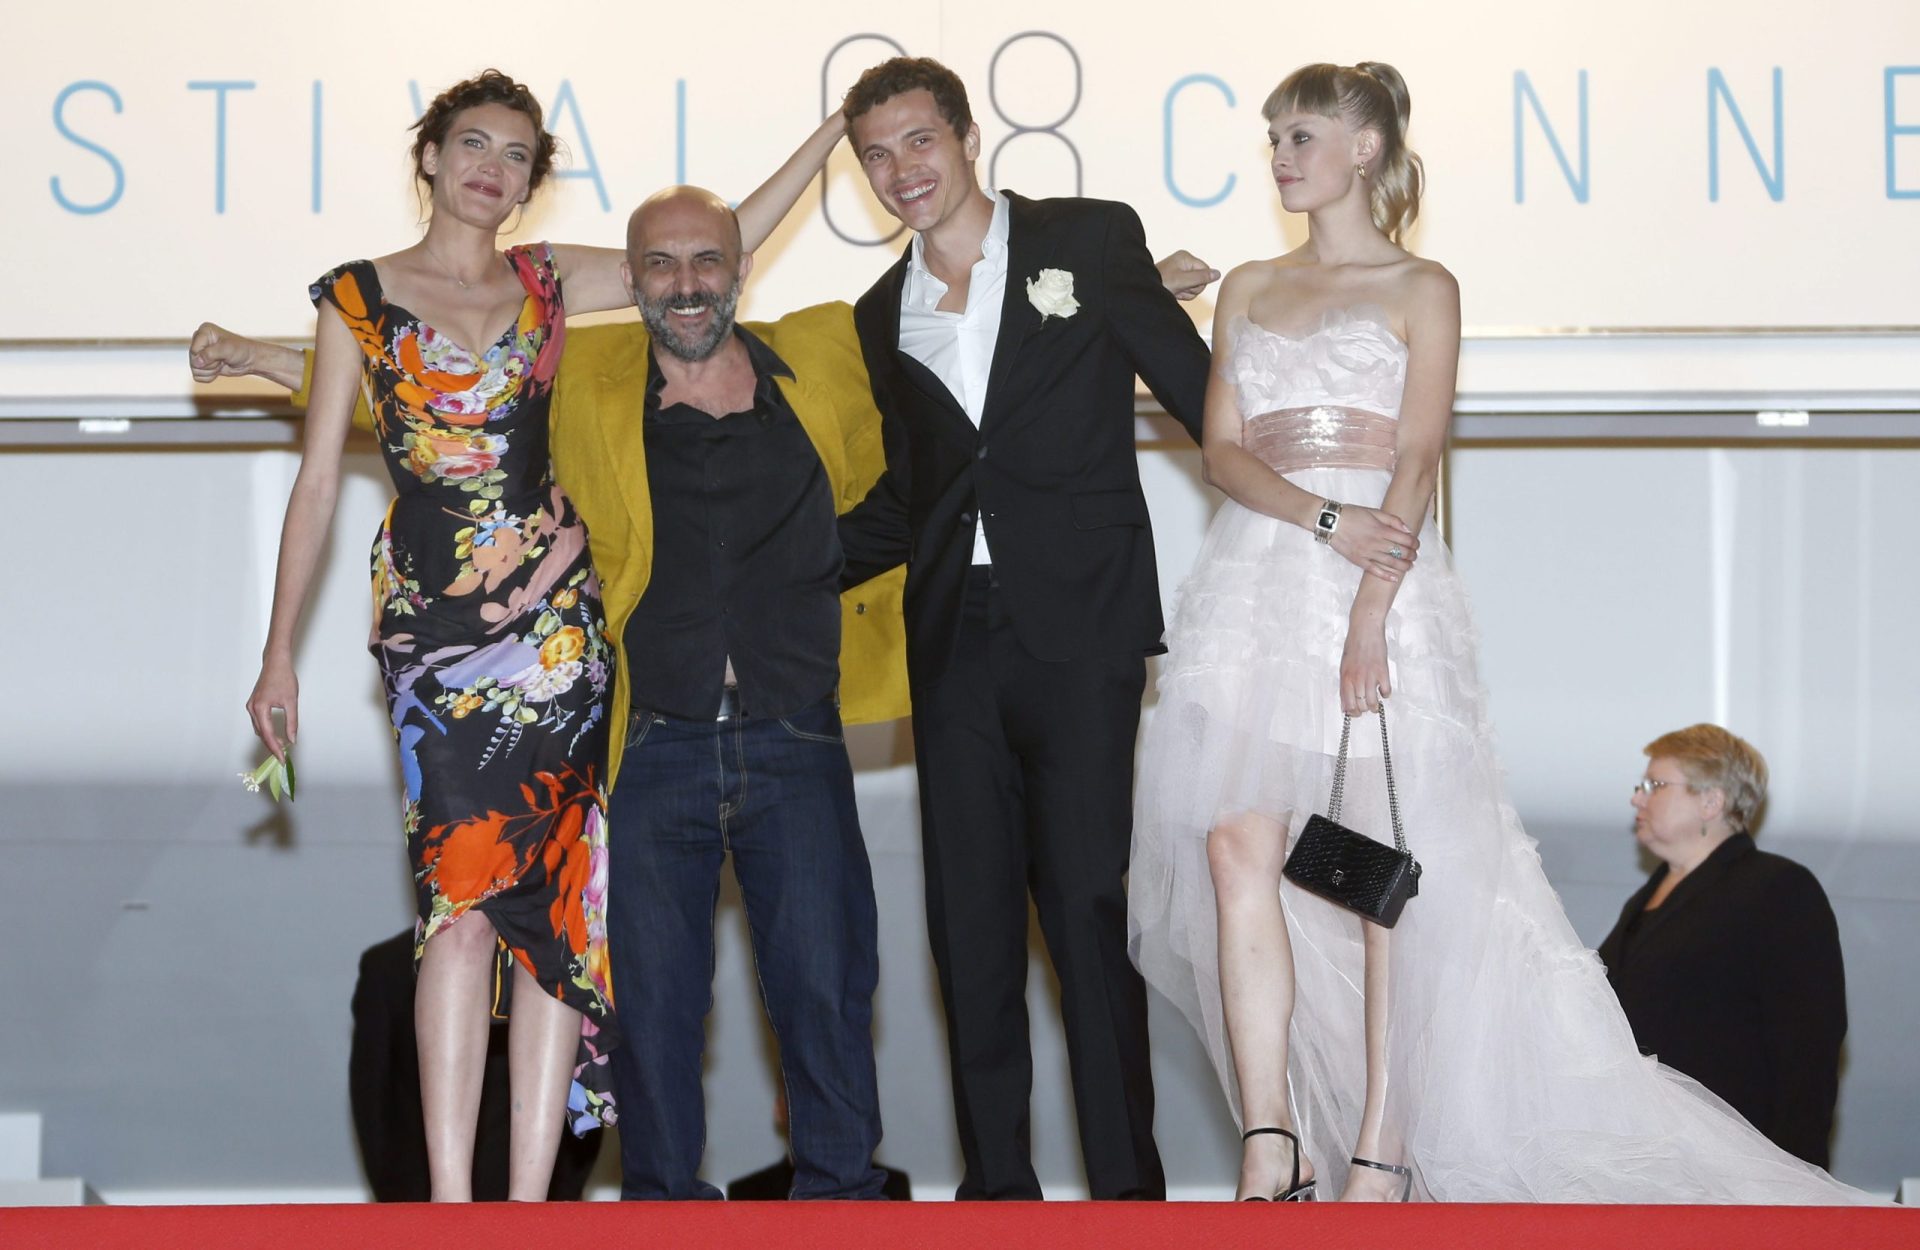 Ménage a trois em 3D choca Cannes